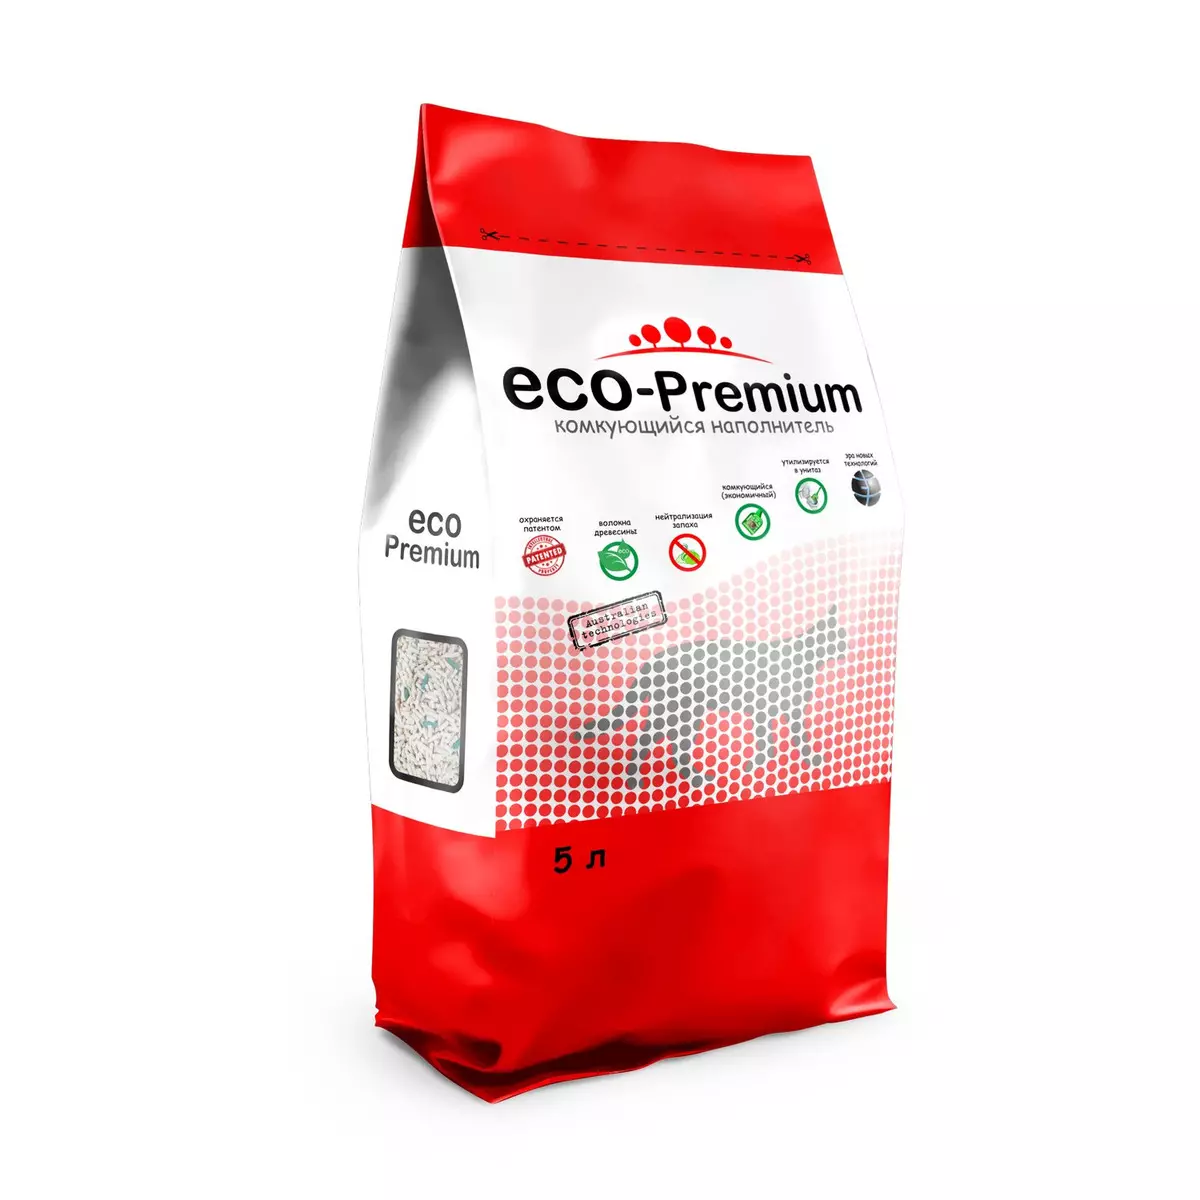 Eco-Premium Fillers: Kombuis Houtvullers vir RTT toilet, Review Reviews 22607_4